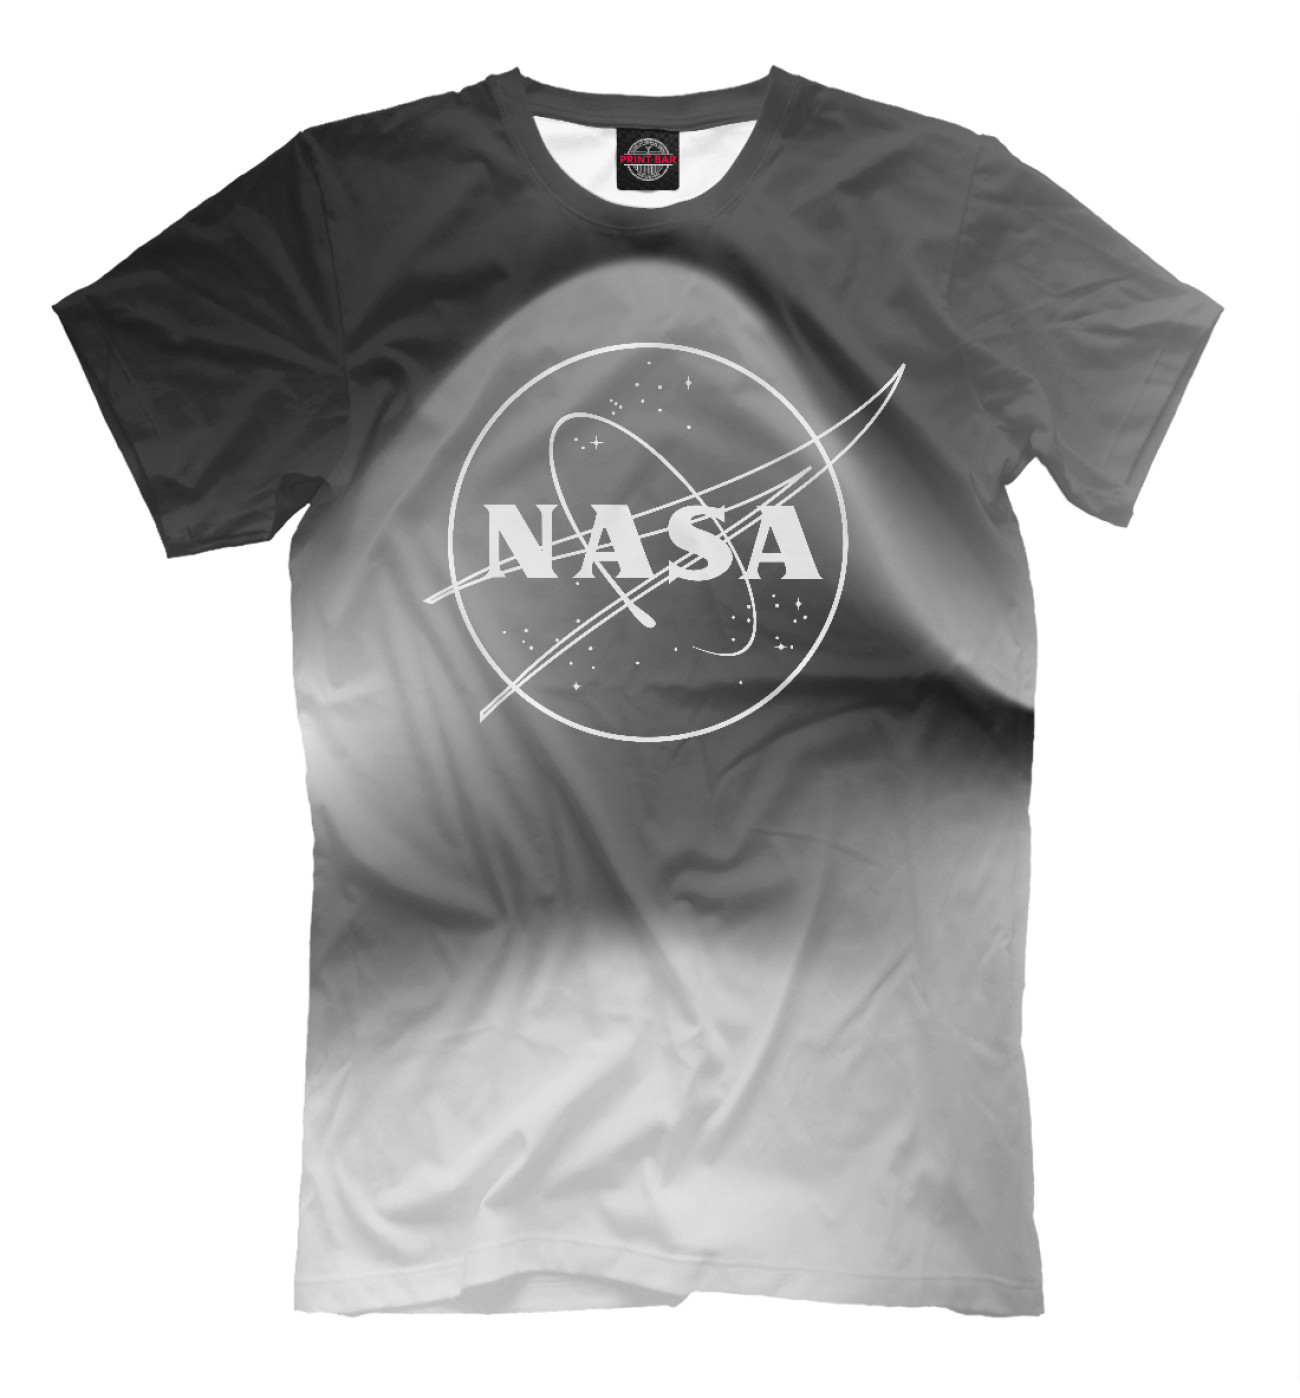 Мужская Футболка NASA grey | Colorrise, артикул: NSA-211976-fut-2